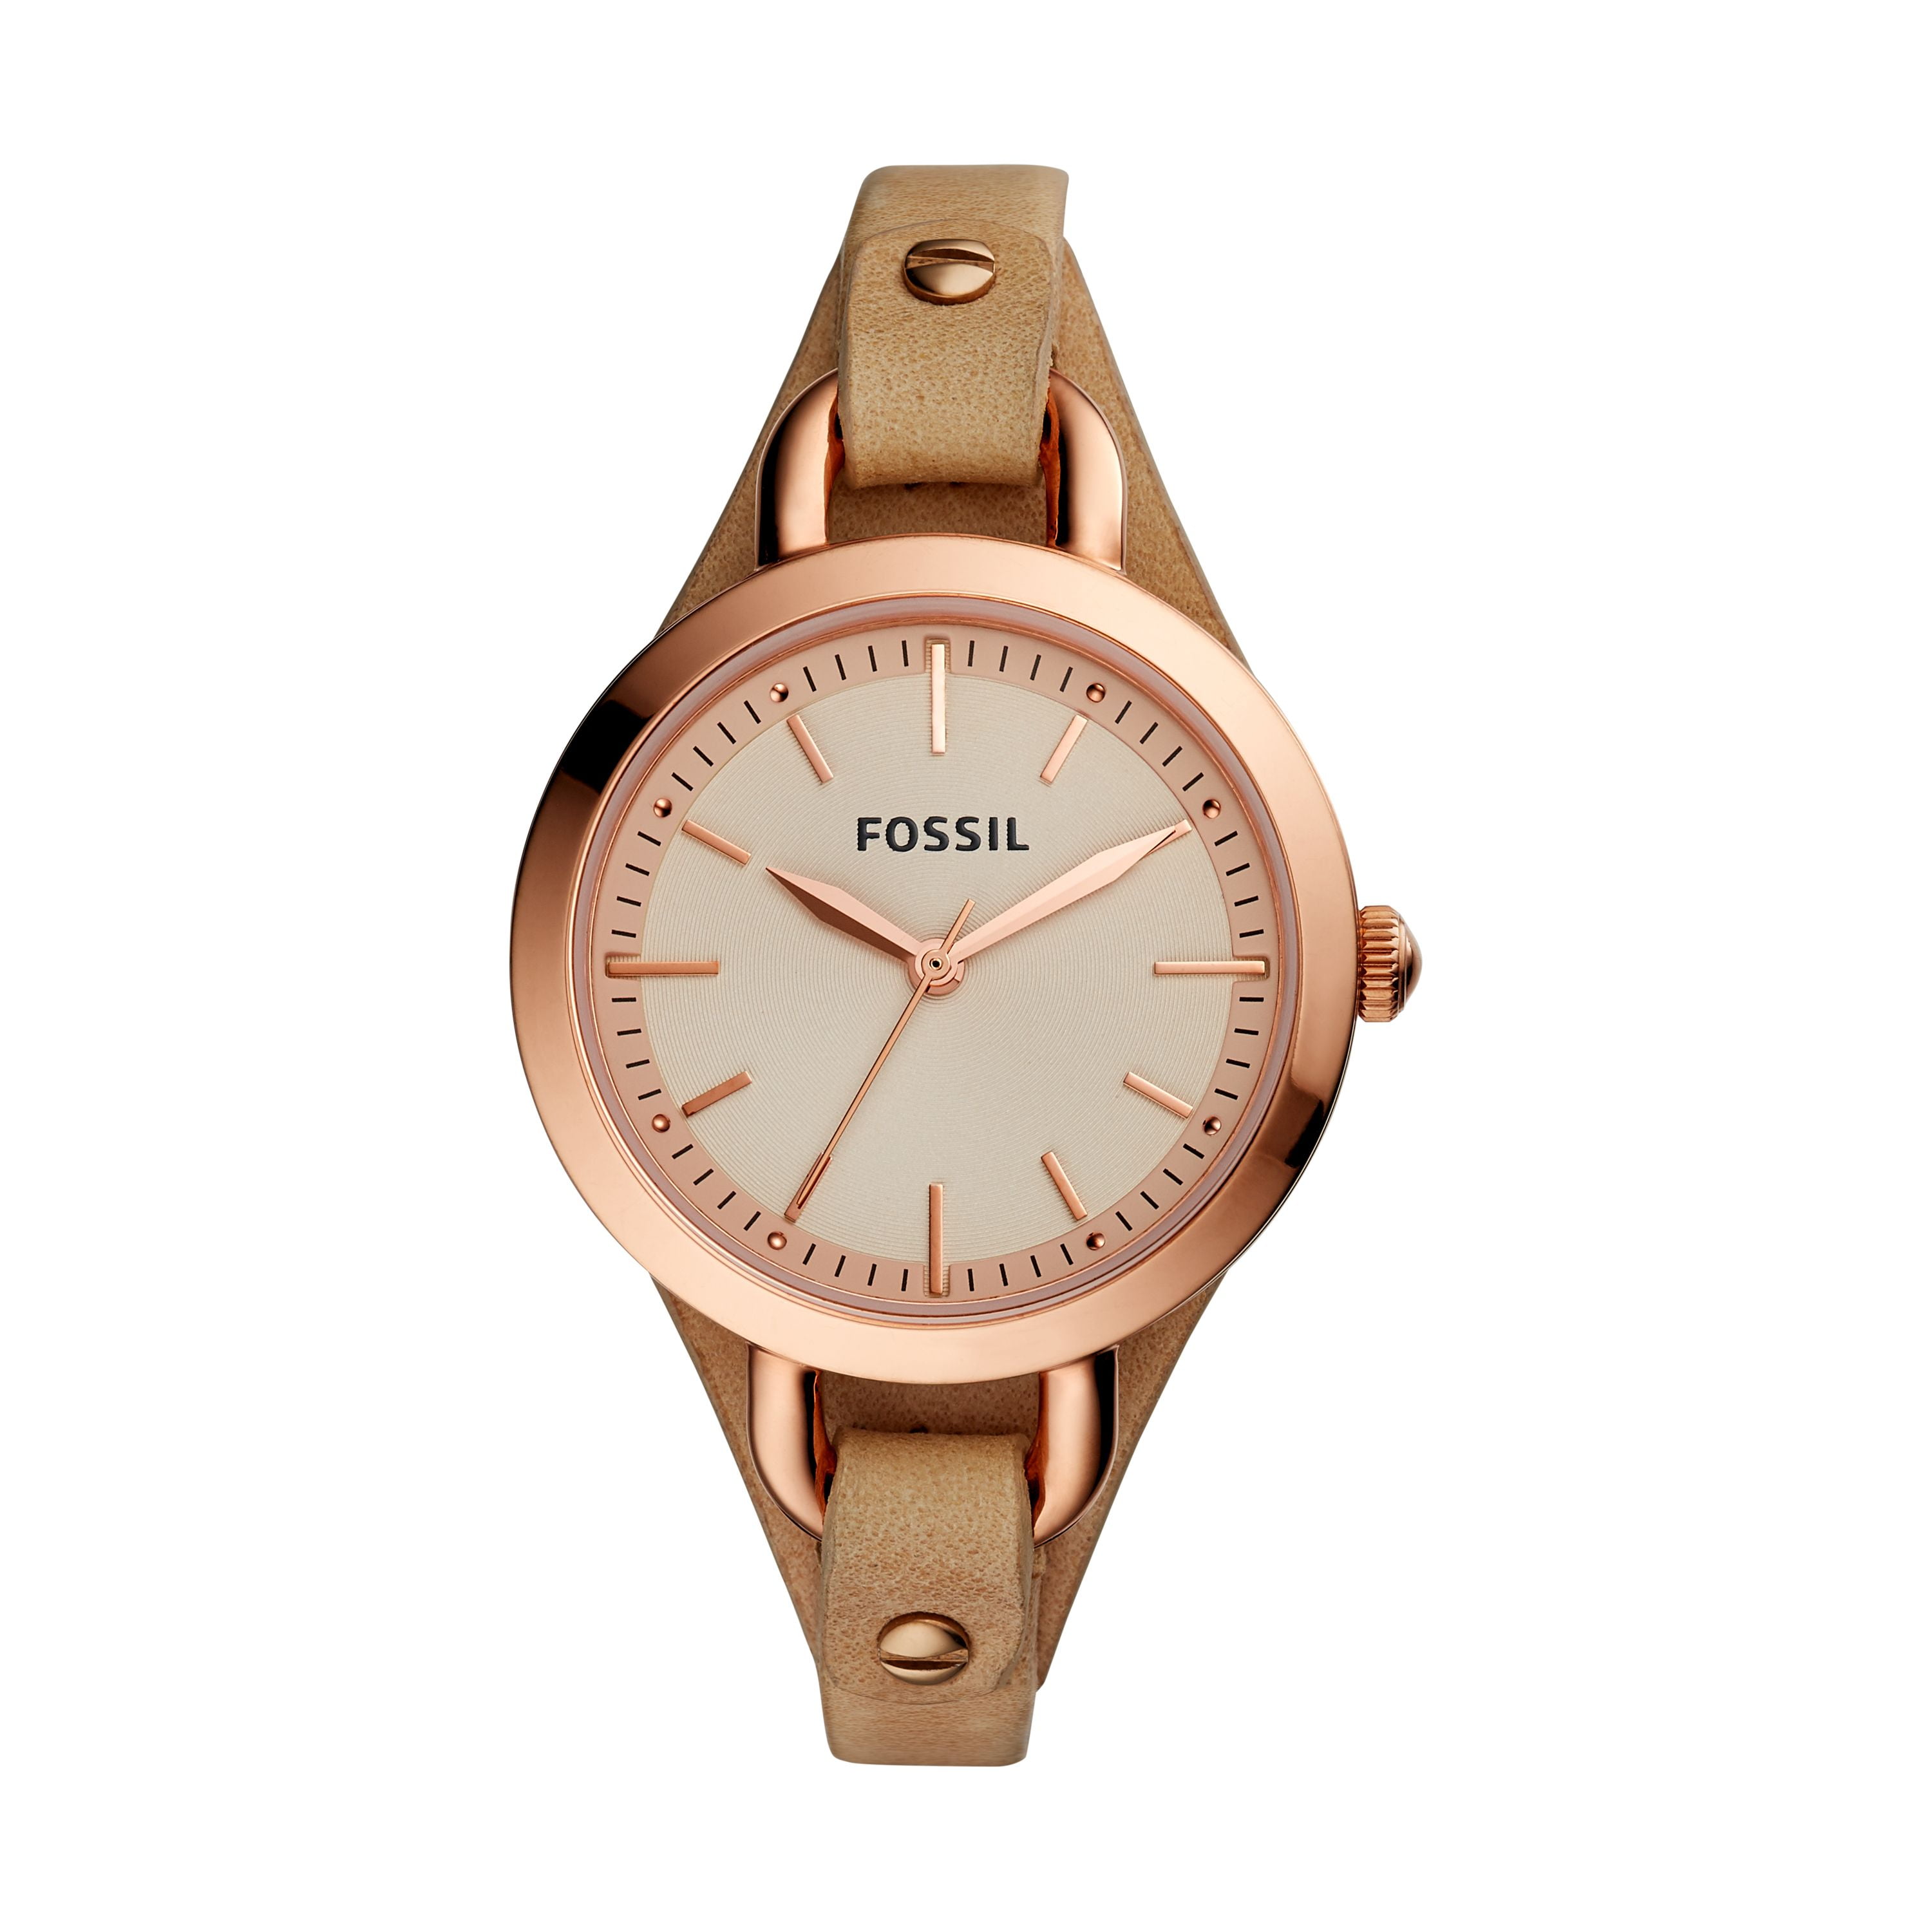 Fossil Women's Classic Minute Leather Watch (Style: BQ3030) - Walmart.com